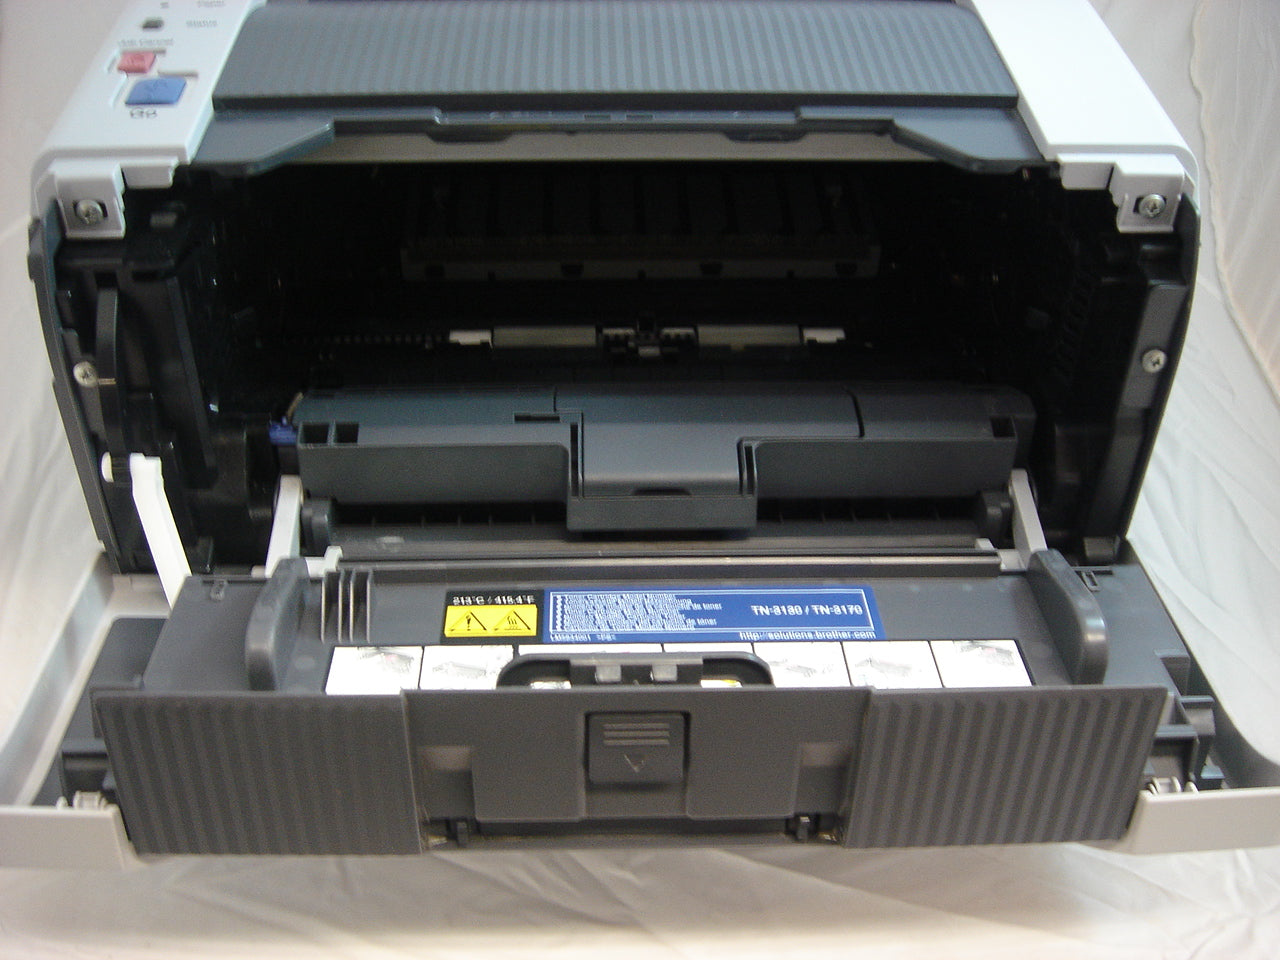 MC3732_HL-5250DN_Brother HL-5250DN Duplex Laser Printer - Image5